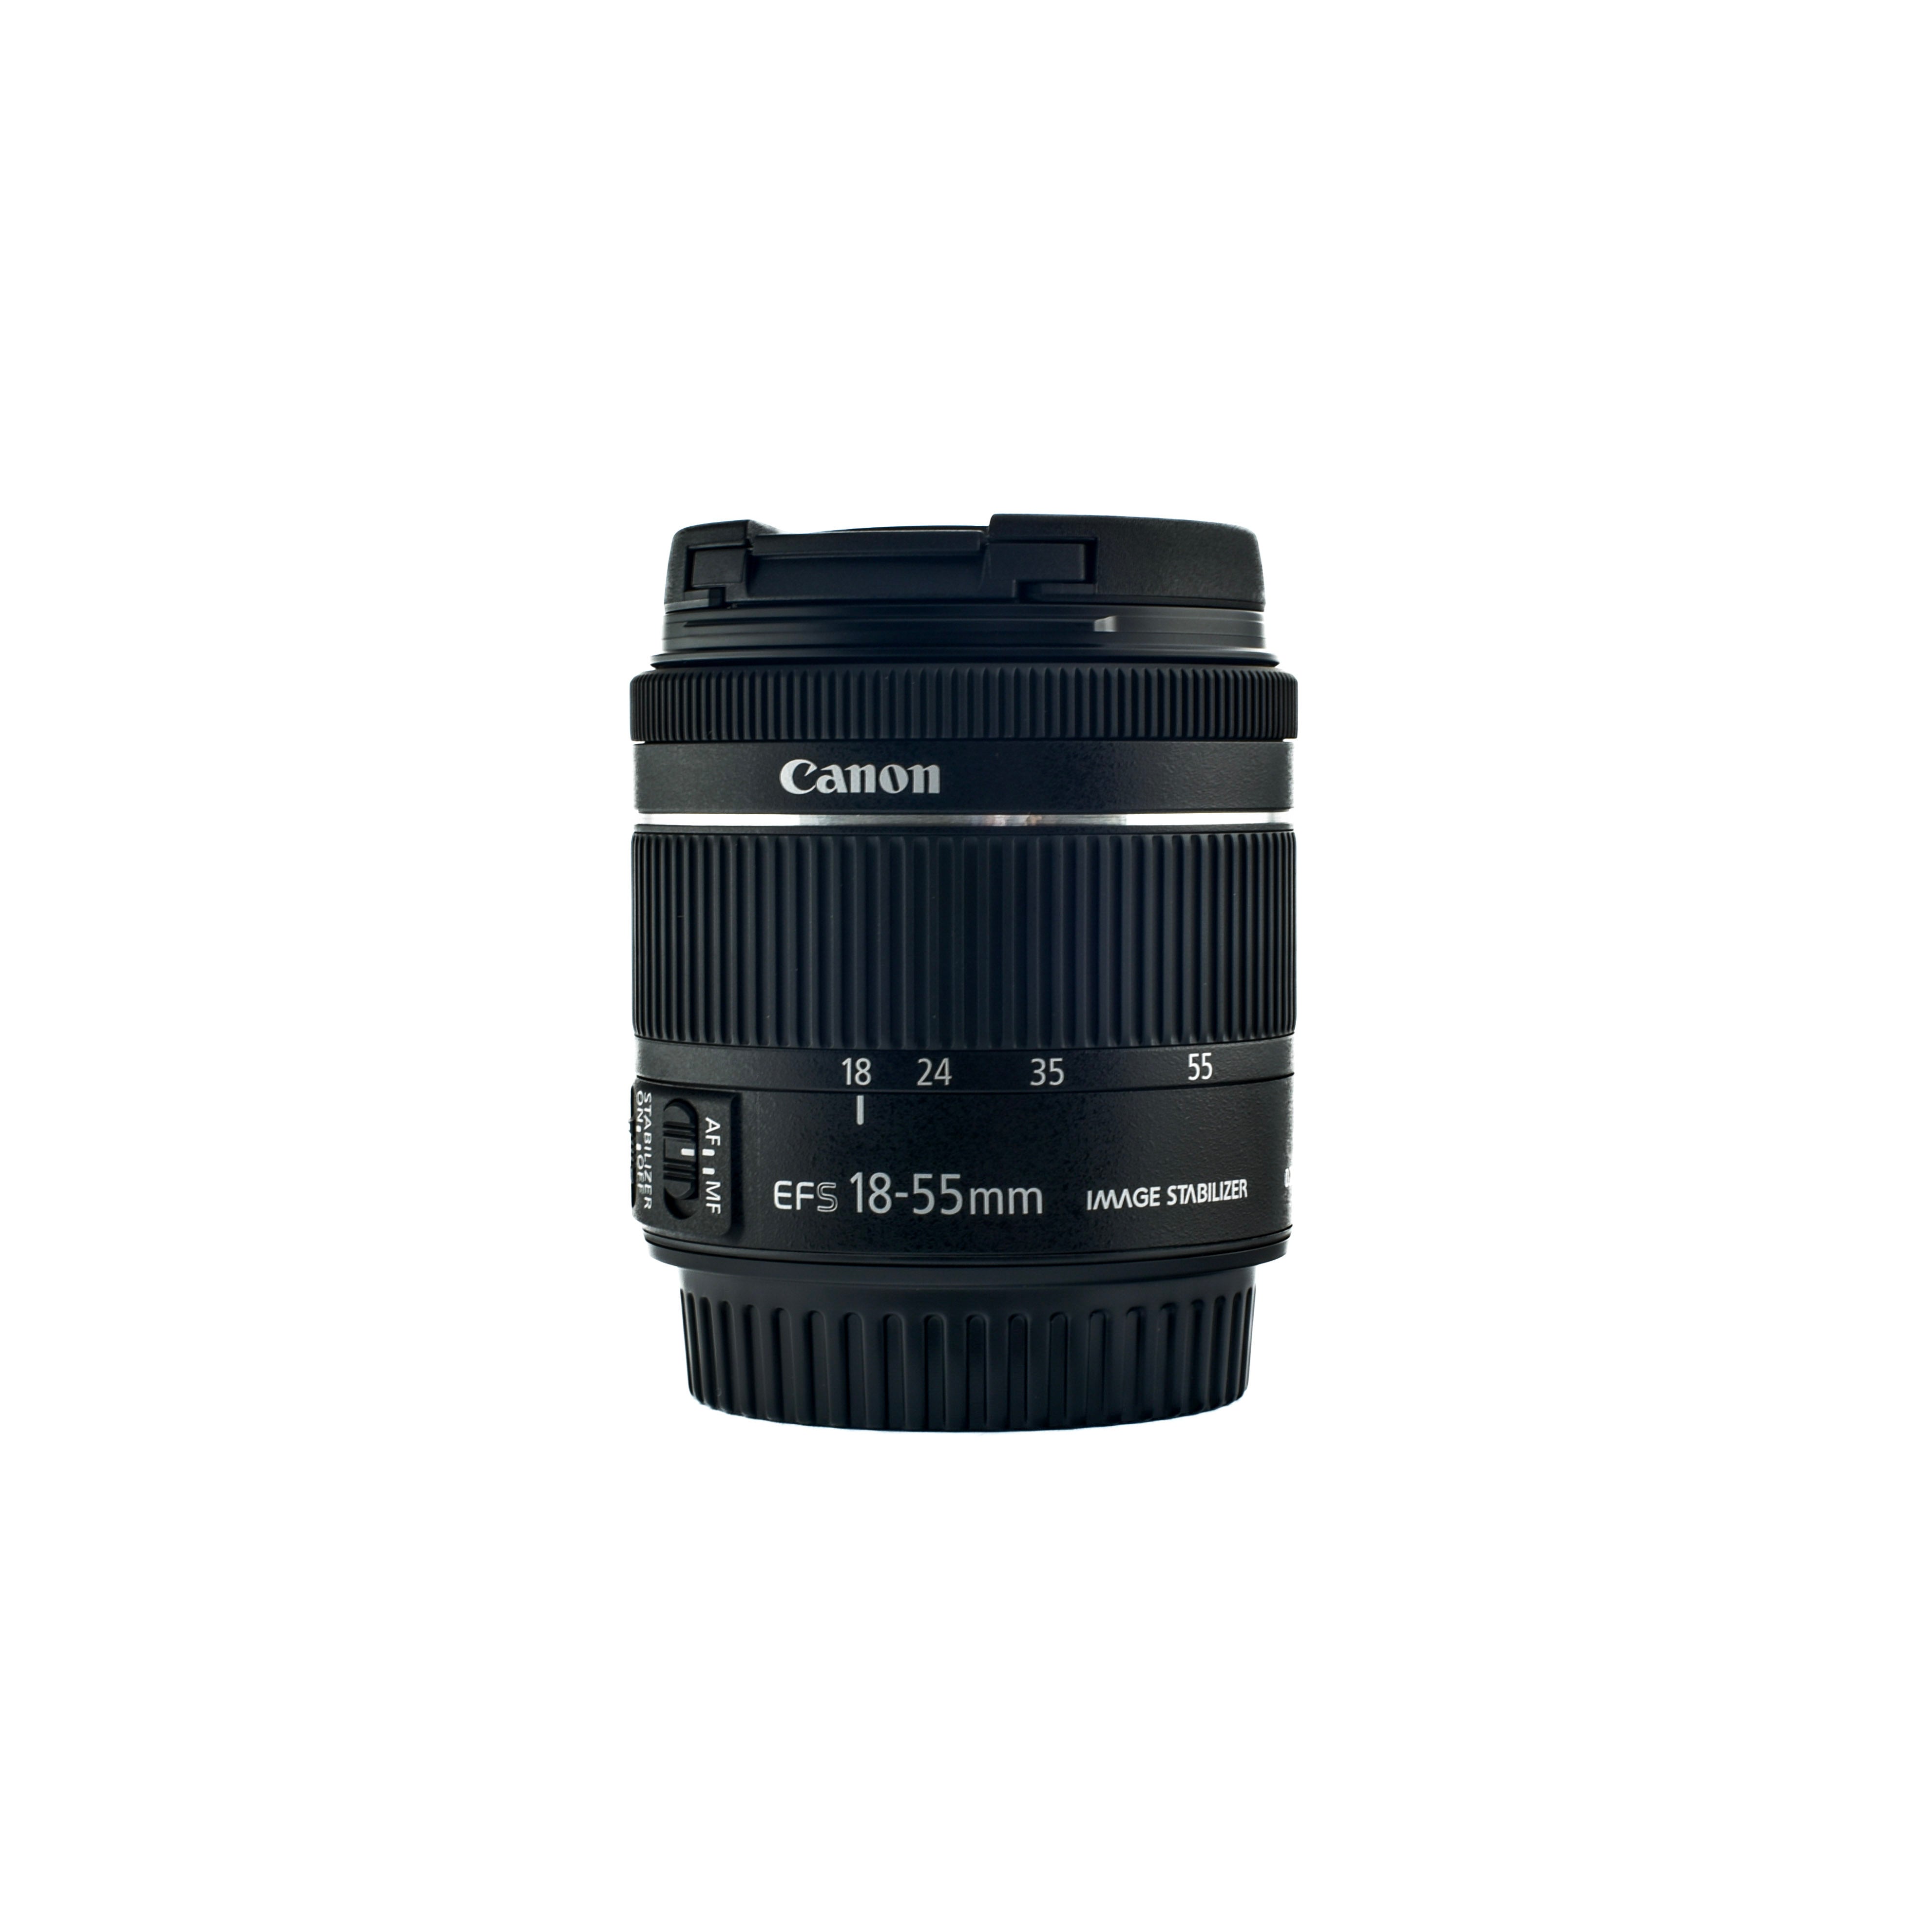 Canon EF-S 18-55mm f/3.5-5.6 IS STM lens